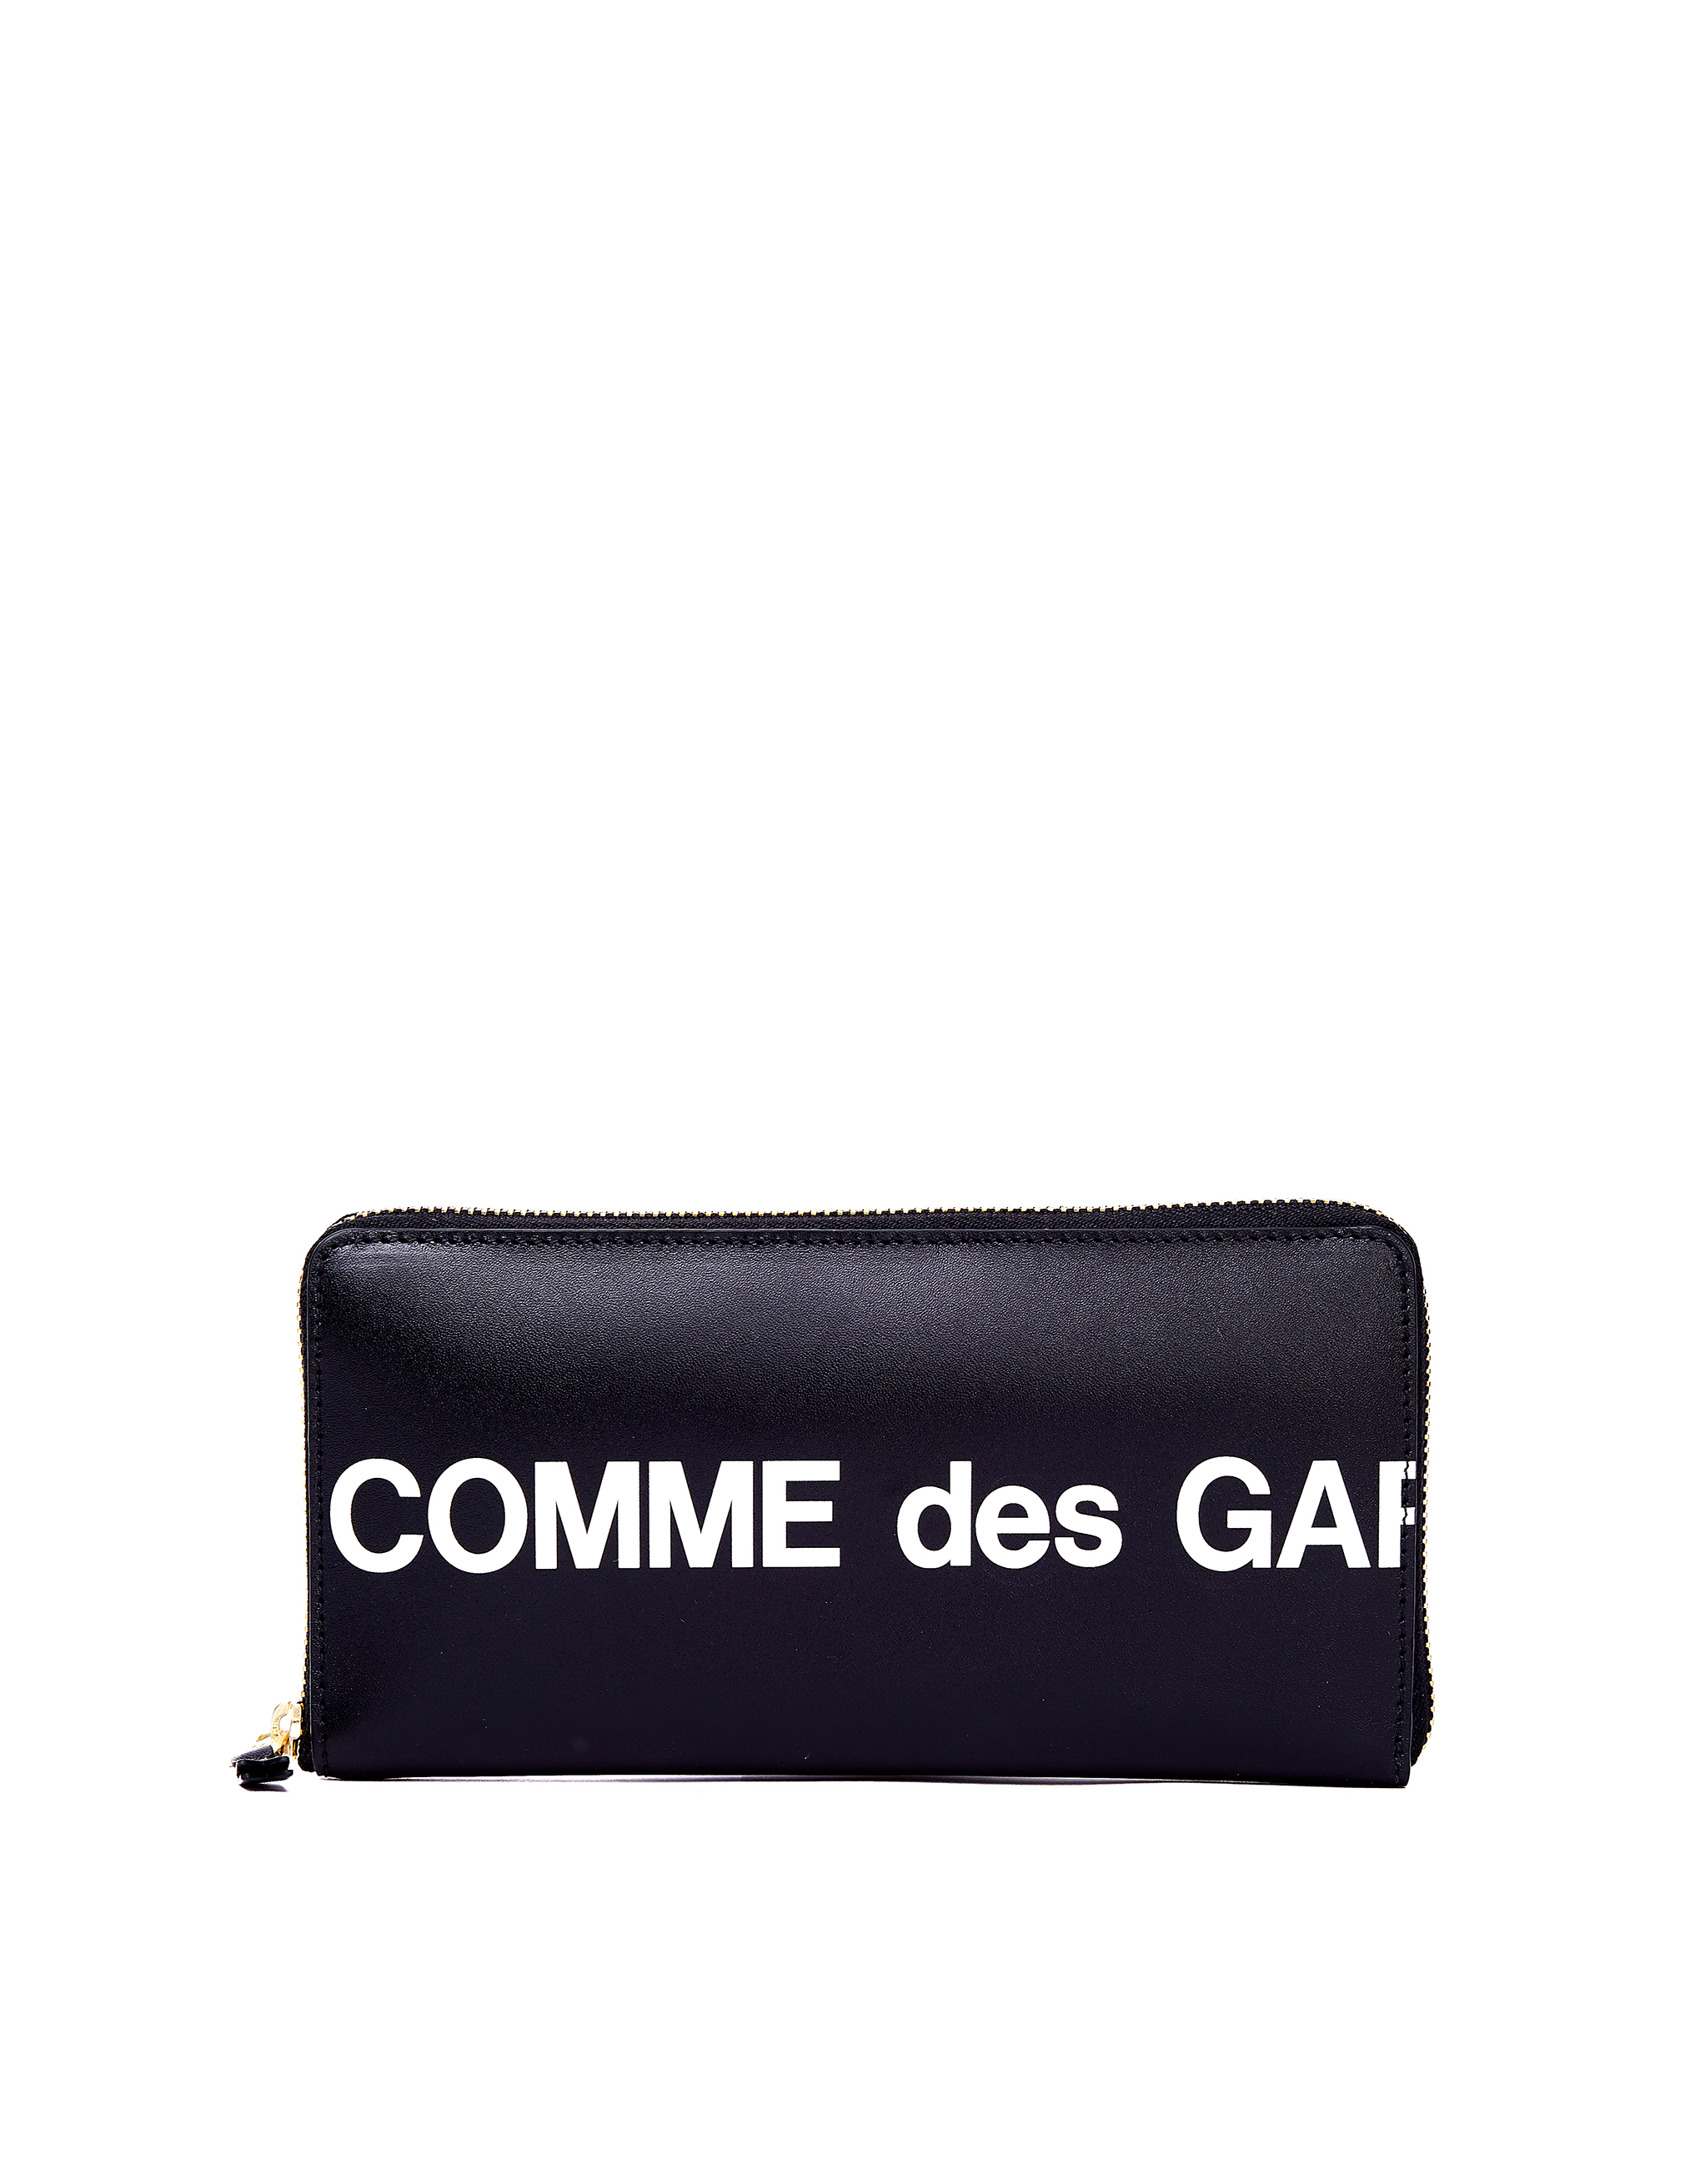 Черный кожаный кошелек Comme des Garcons Wallets SA0110HL/blk, размер One Size